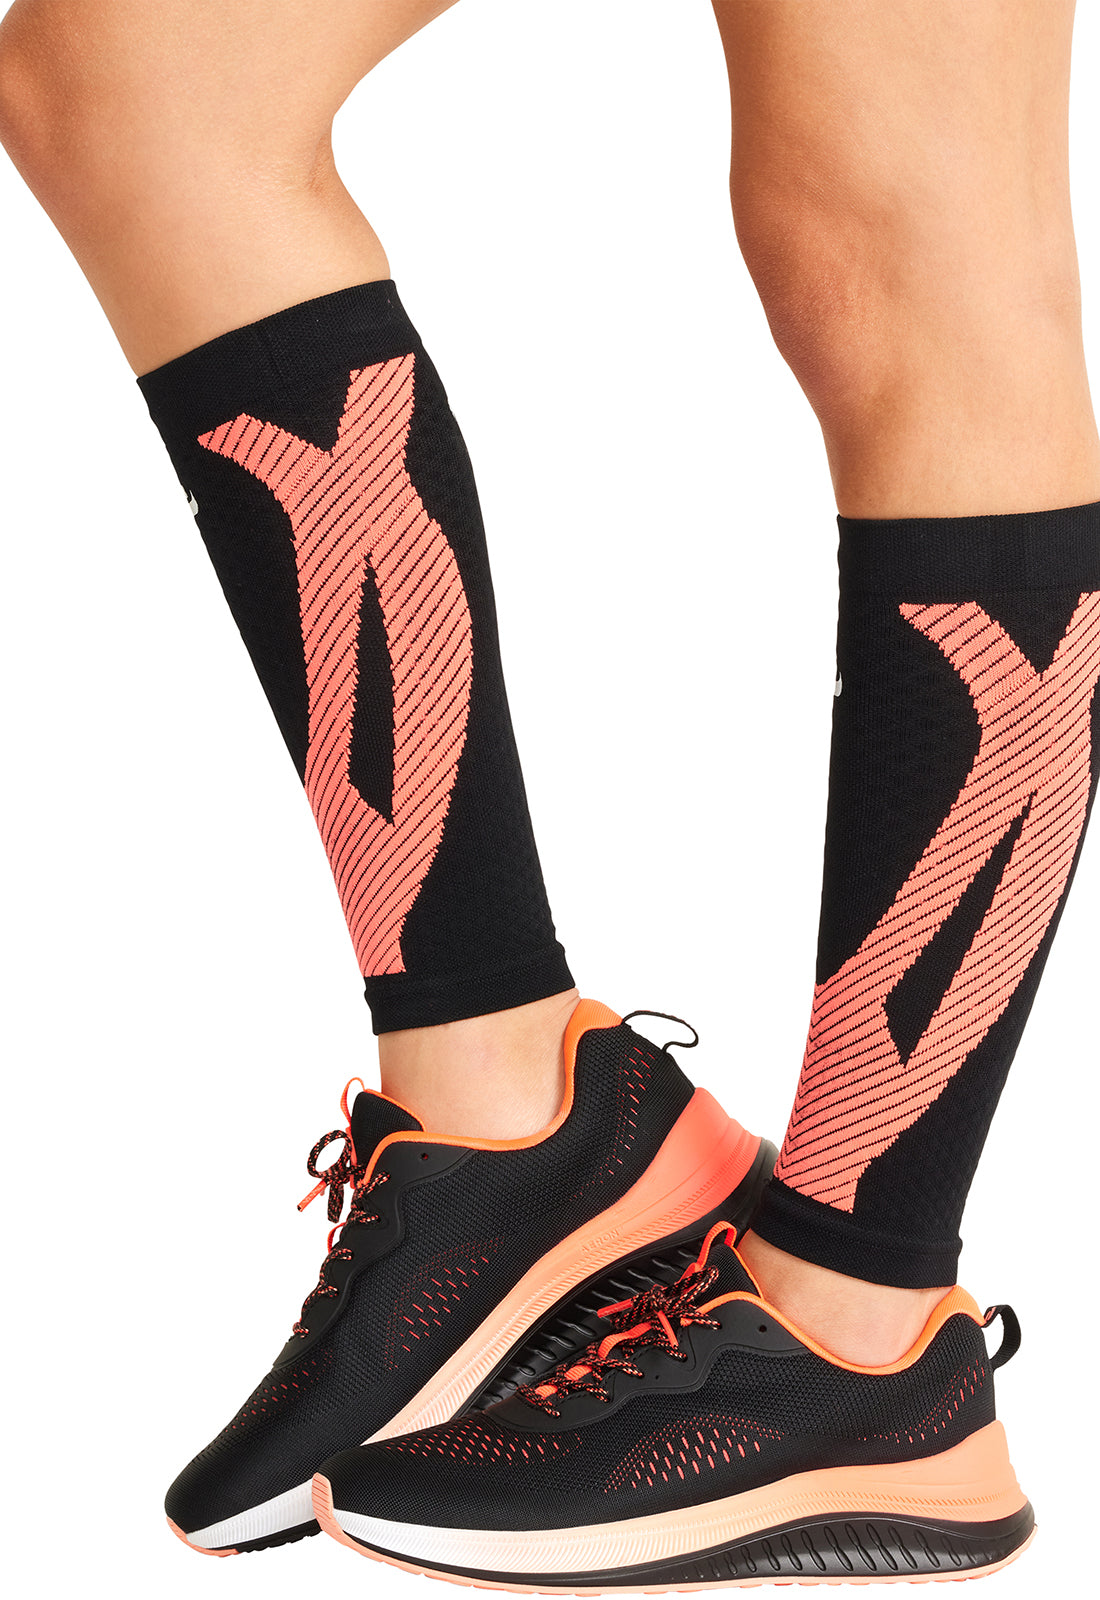 Calf Sleeve 10-15 mmHg Compression Compression Socks Cherokee Infinity Footwear   